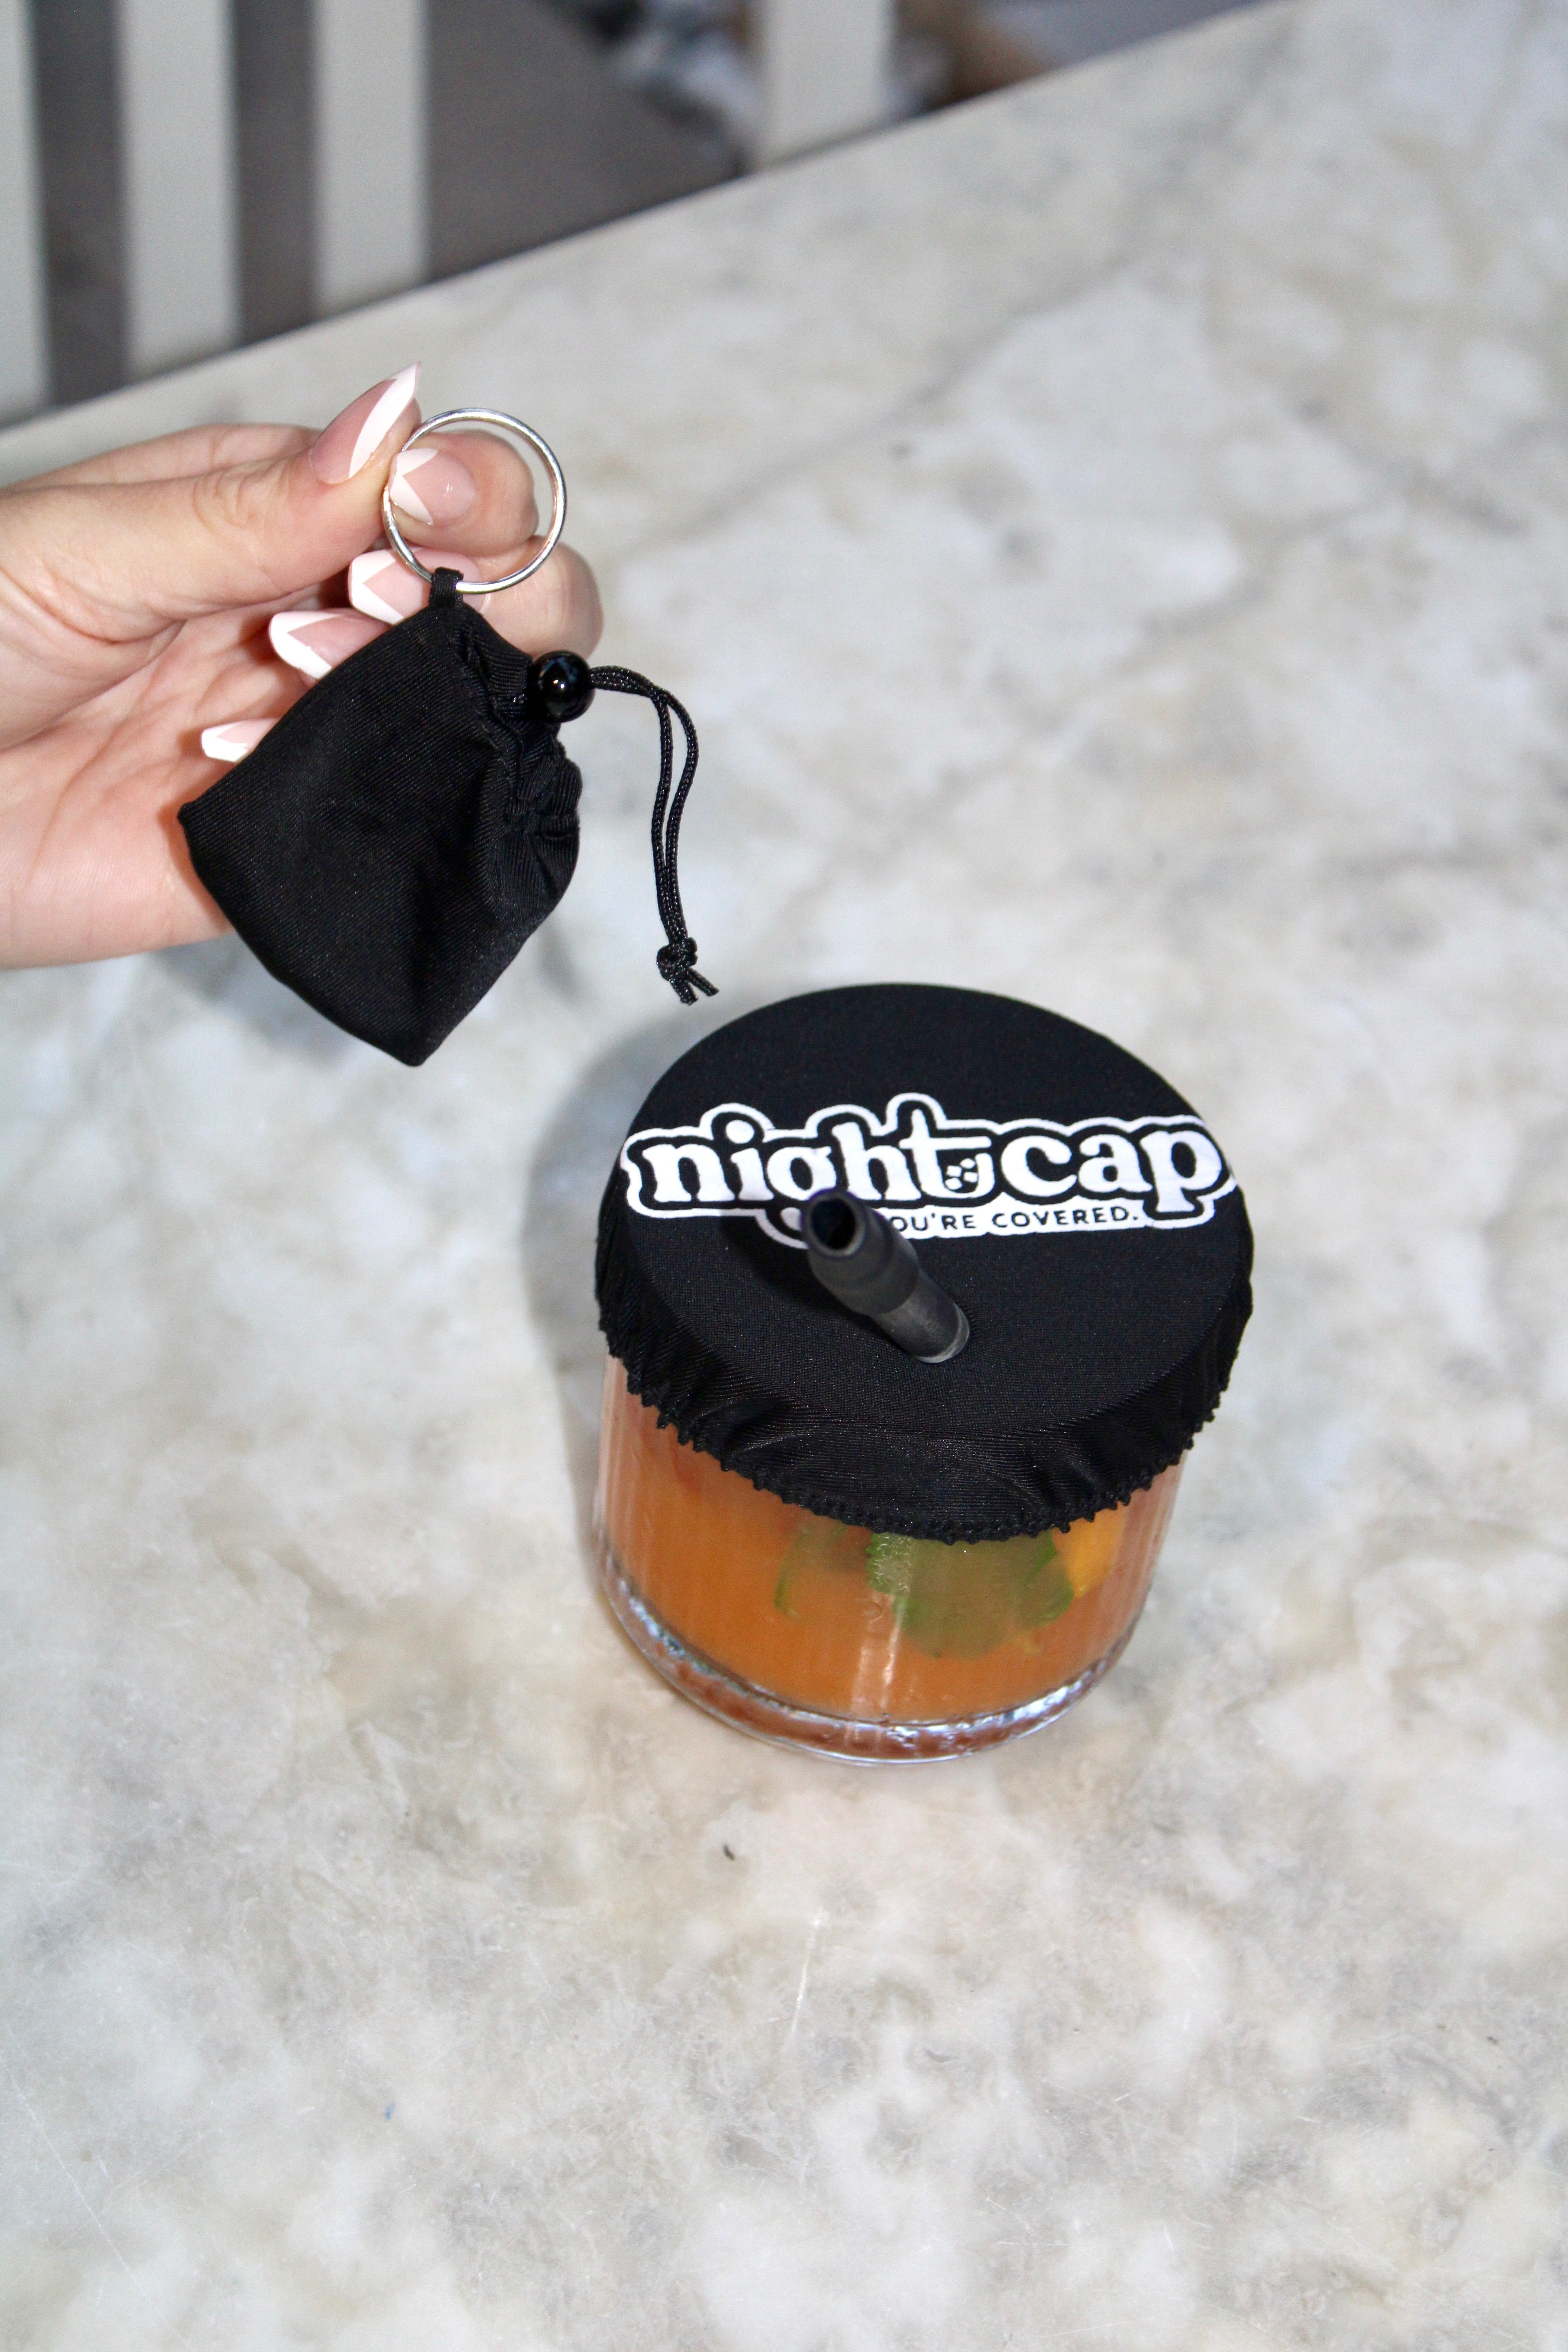 West Palm Beach Teen Fights Drink Spiking With 'Nightcap' Invention 